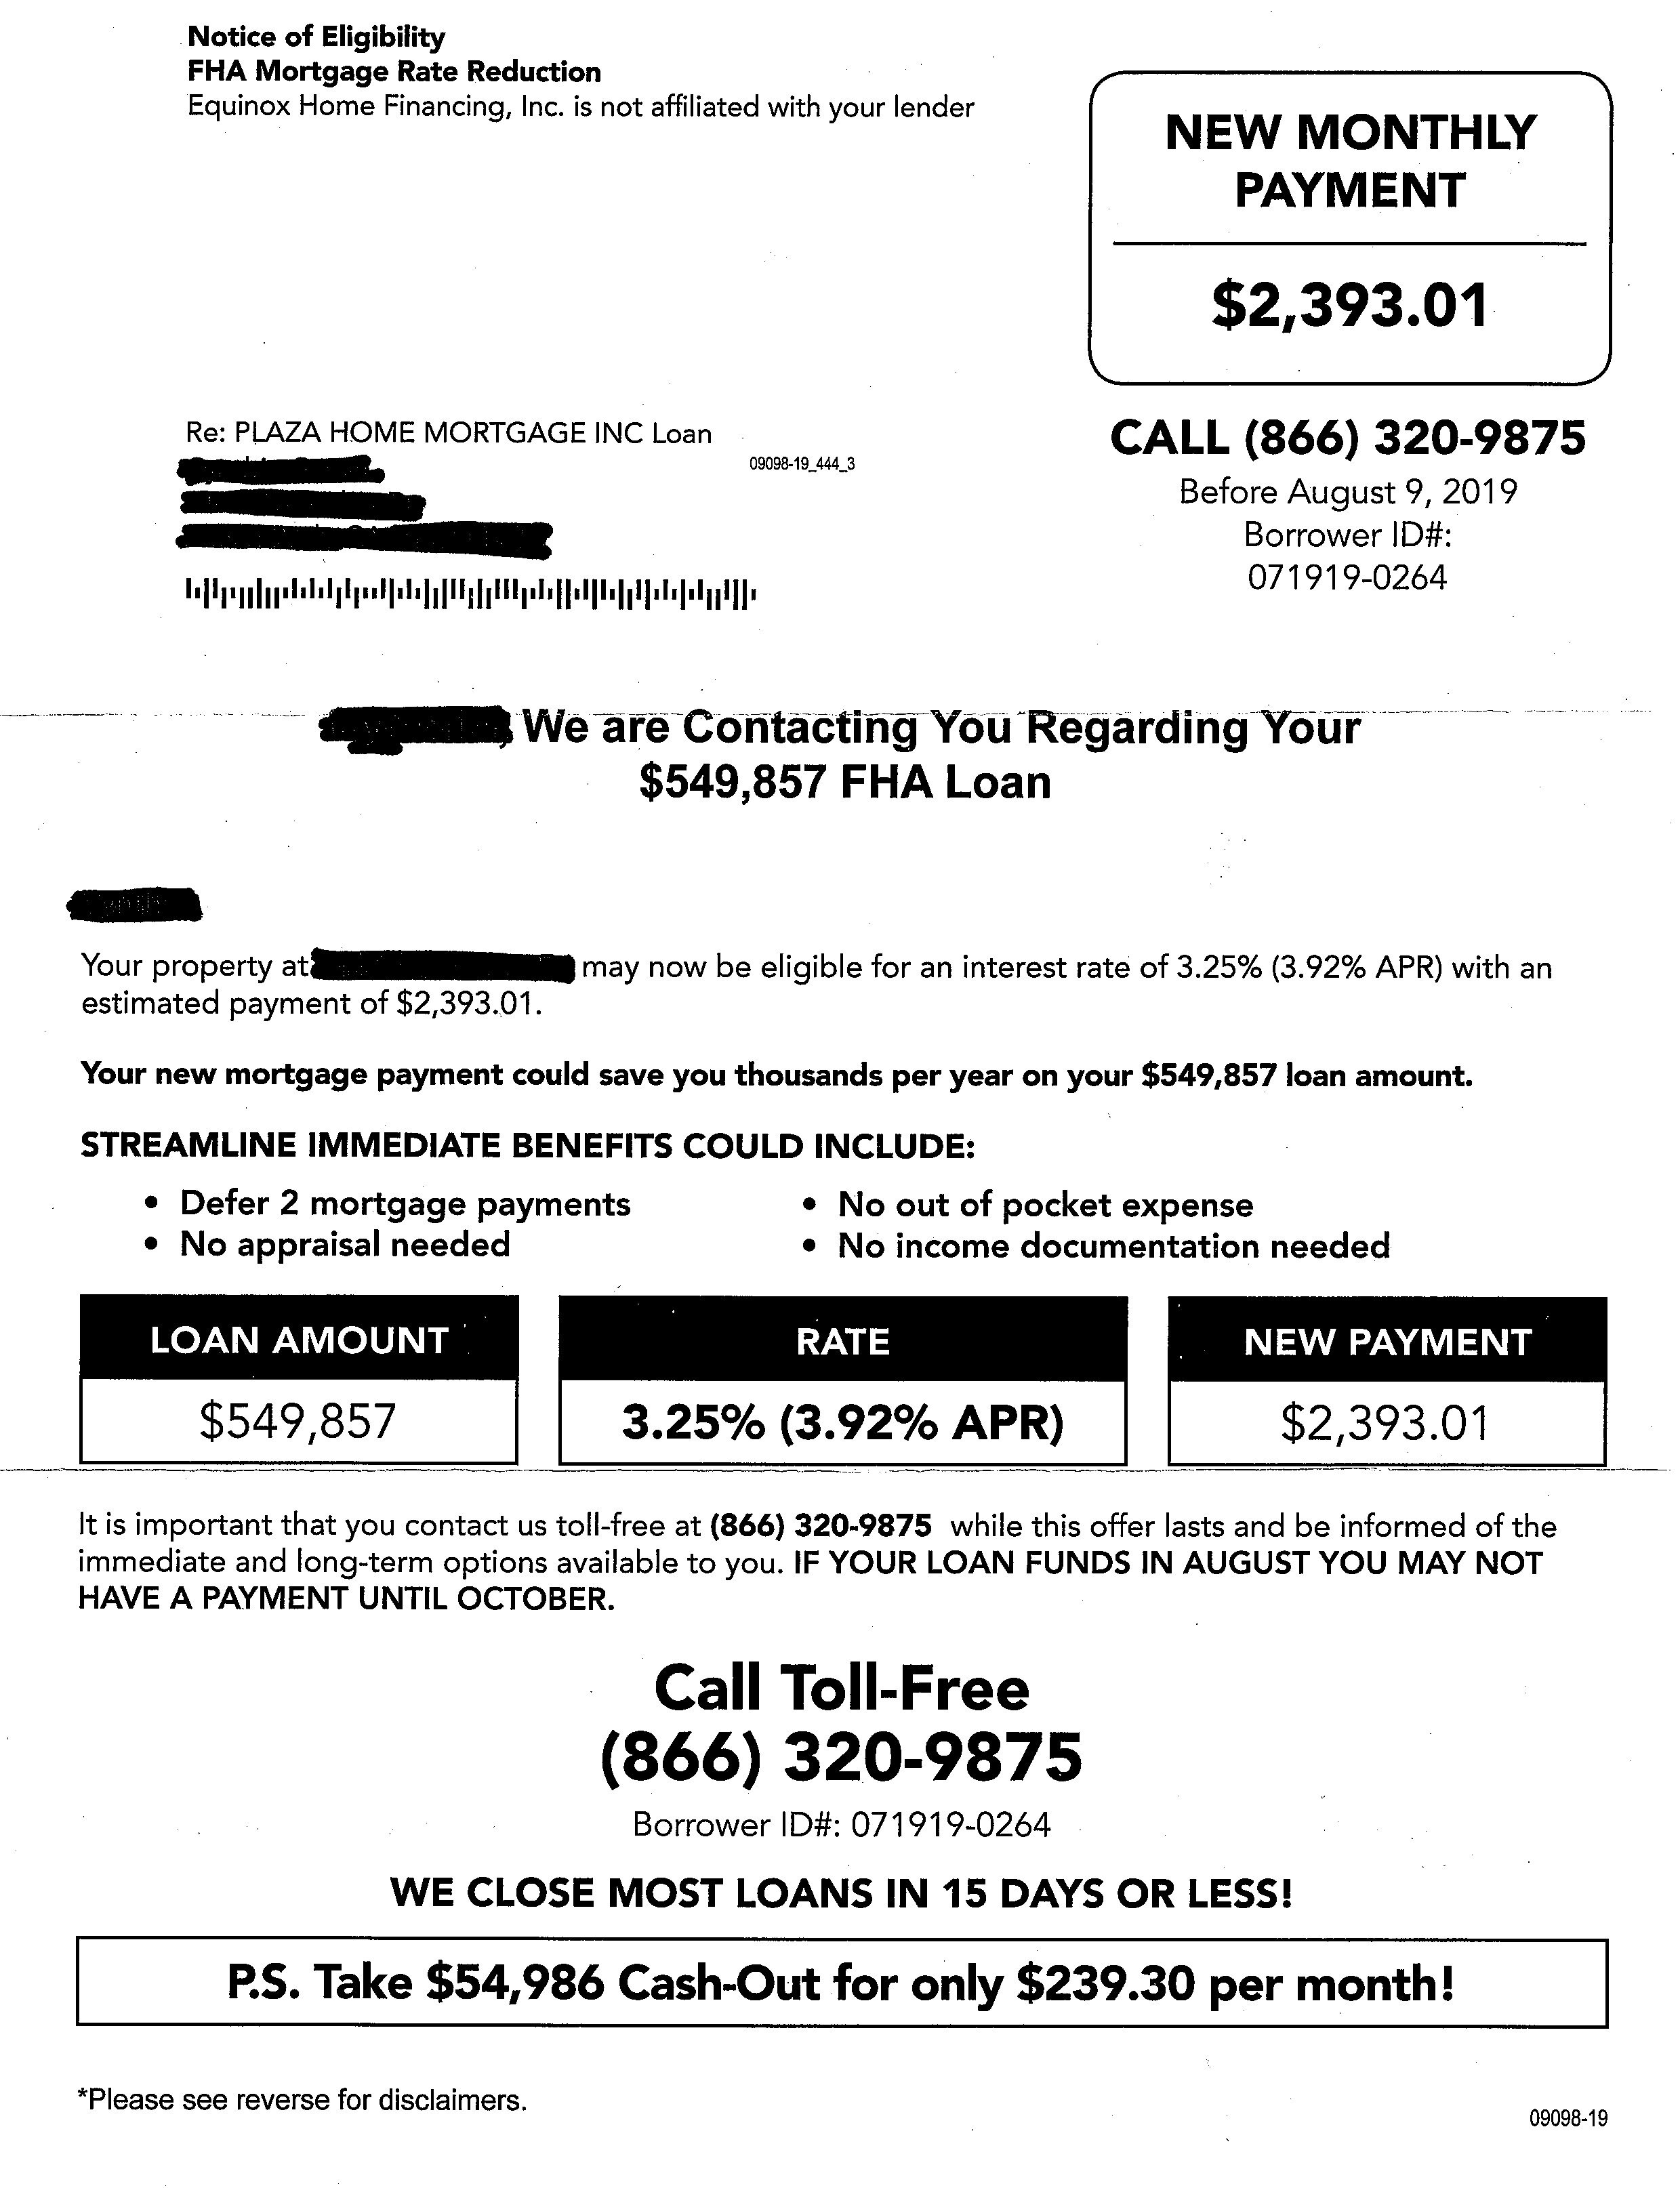 FHA Loan Direct Mail Letter.jpg